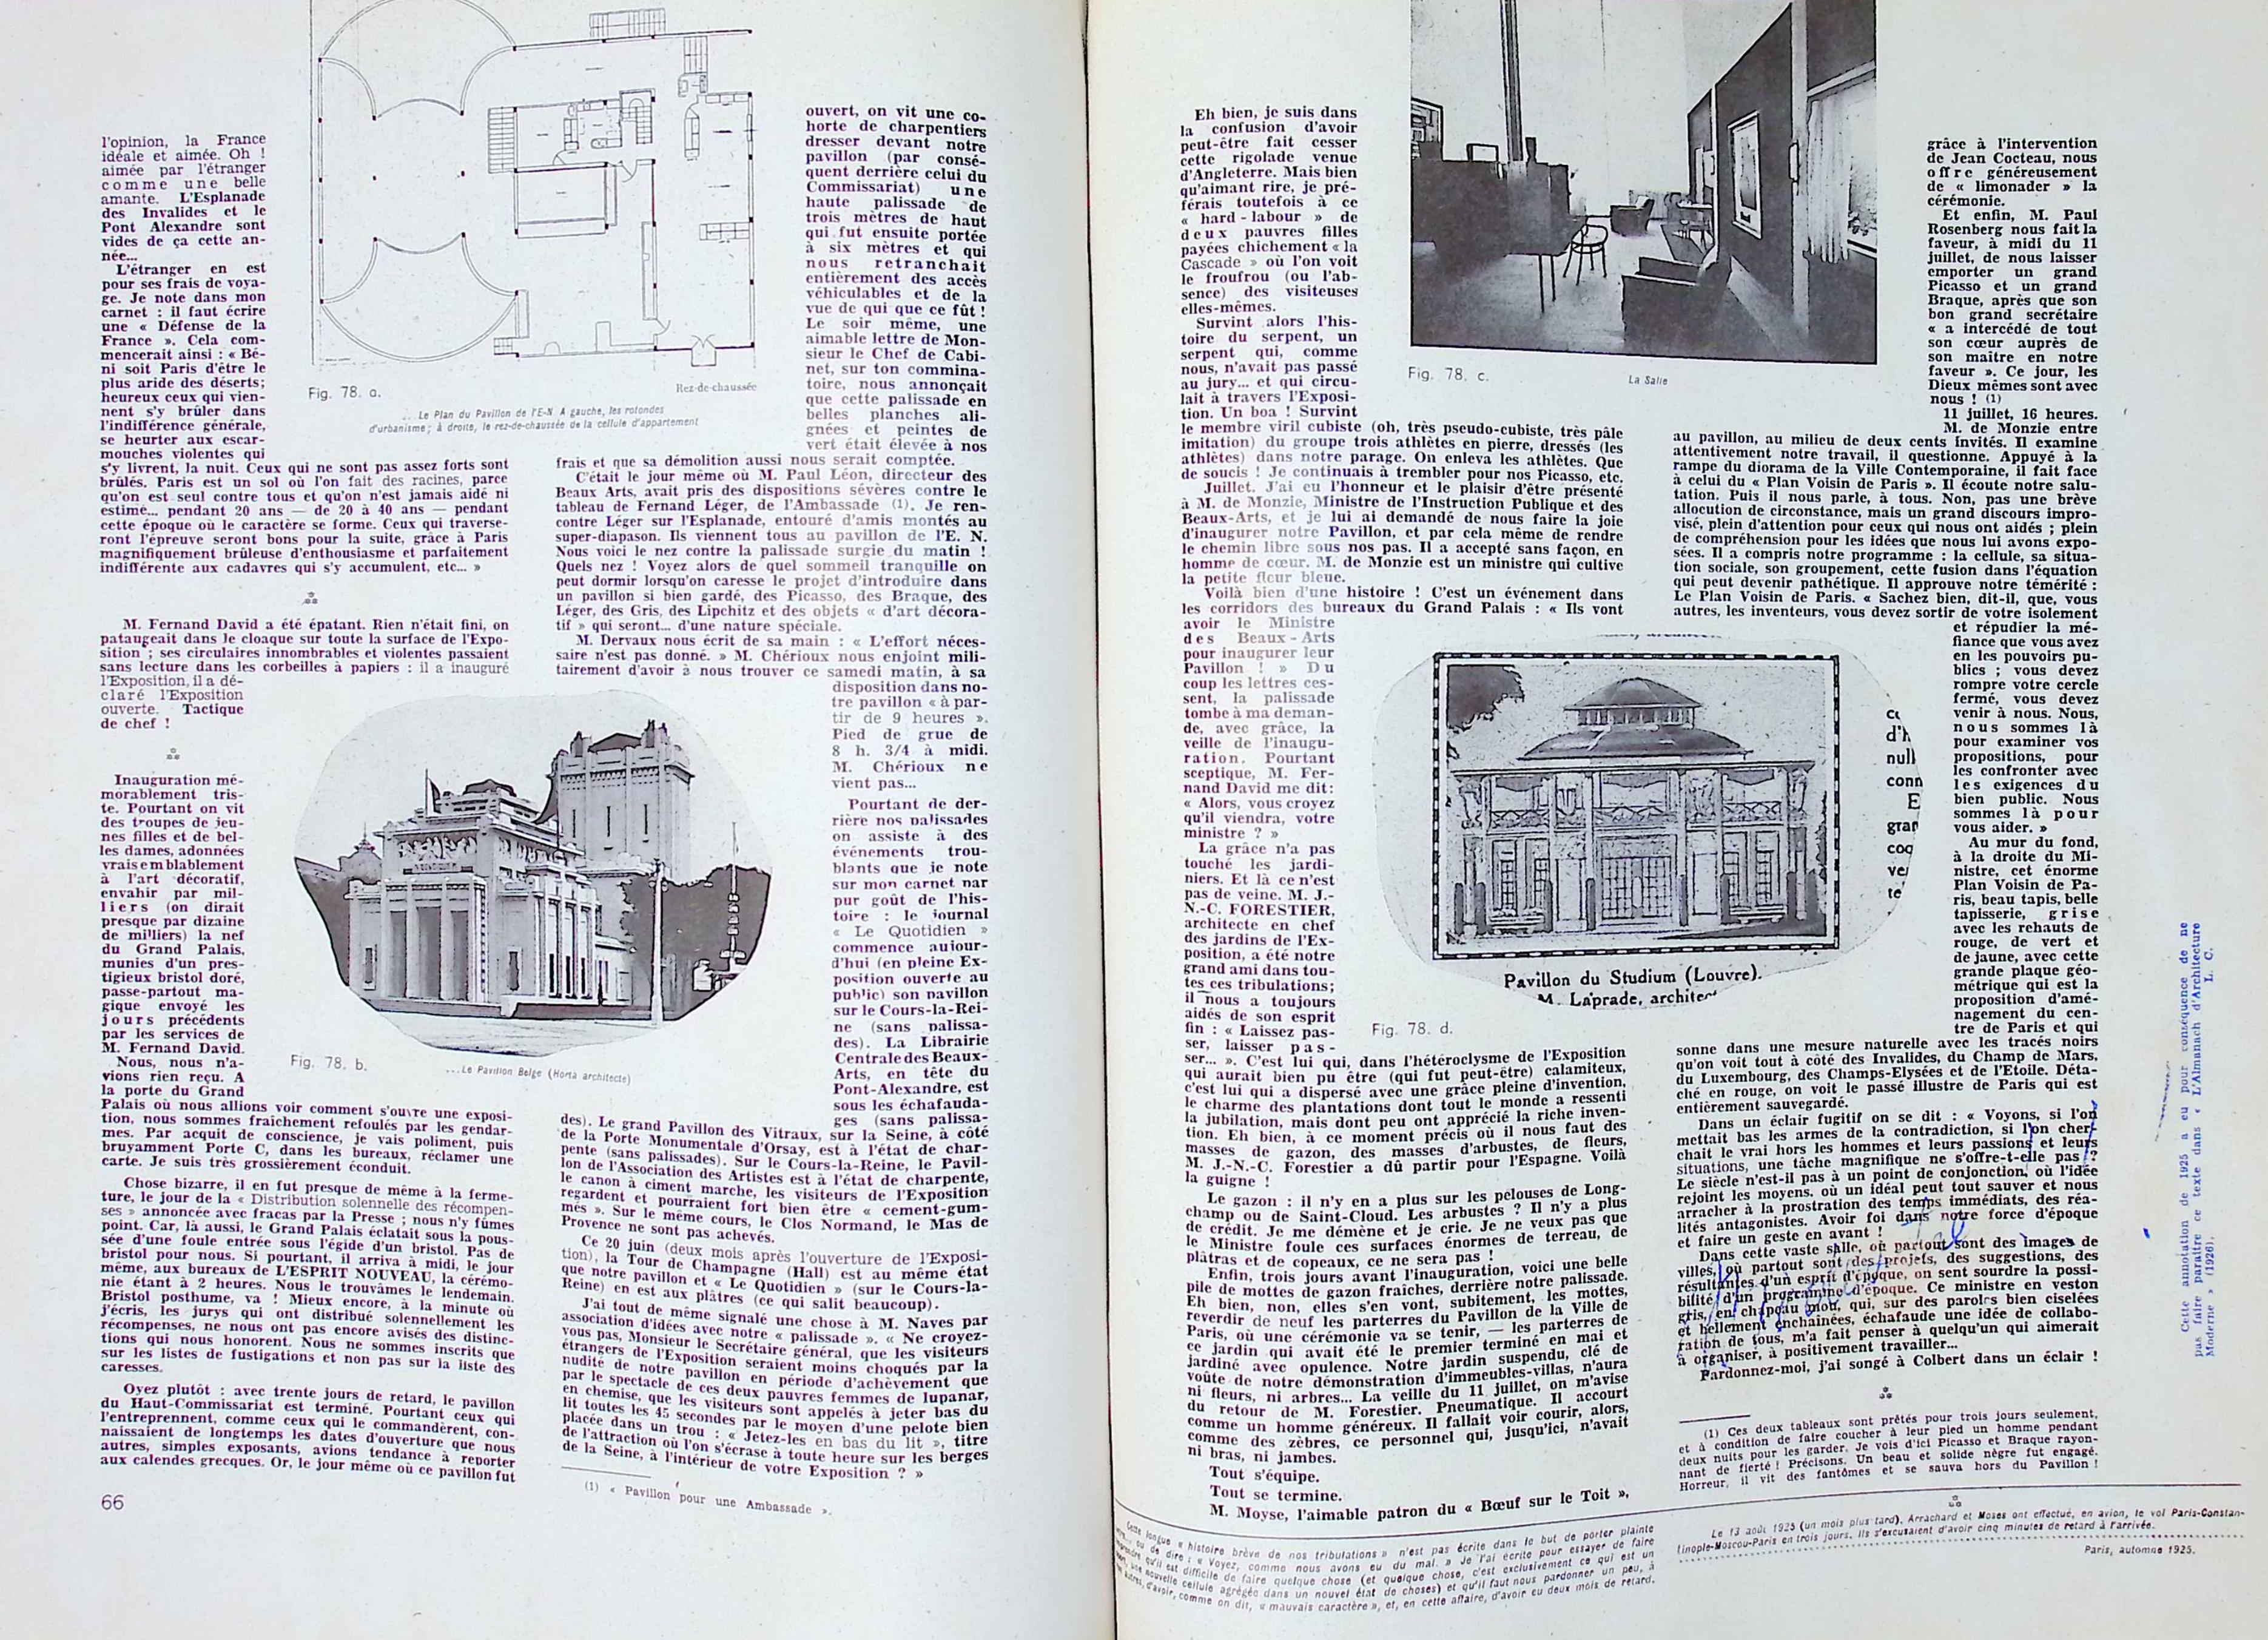 Numro Hors-srie de L'Architecture d'Aujourd'hui. [Special Issue of LArchitecture dAujourdhui].